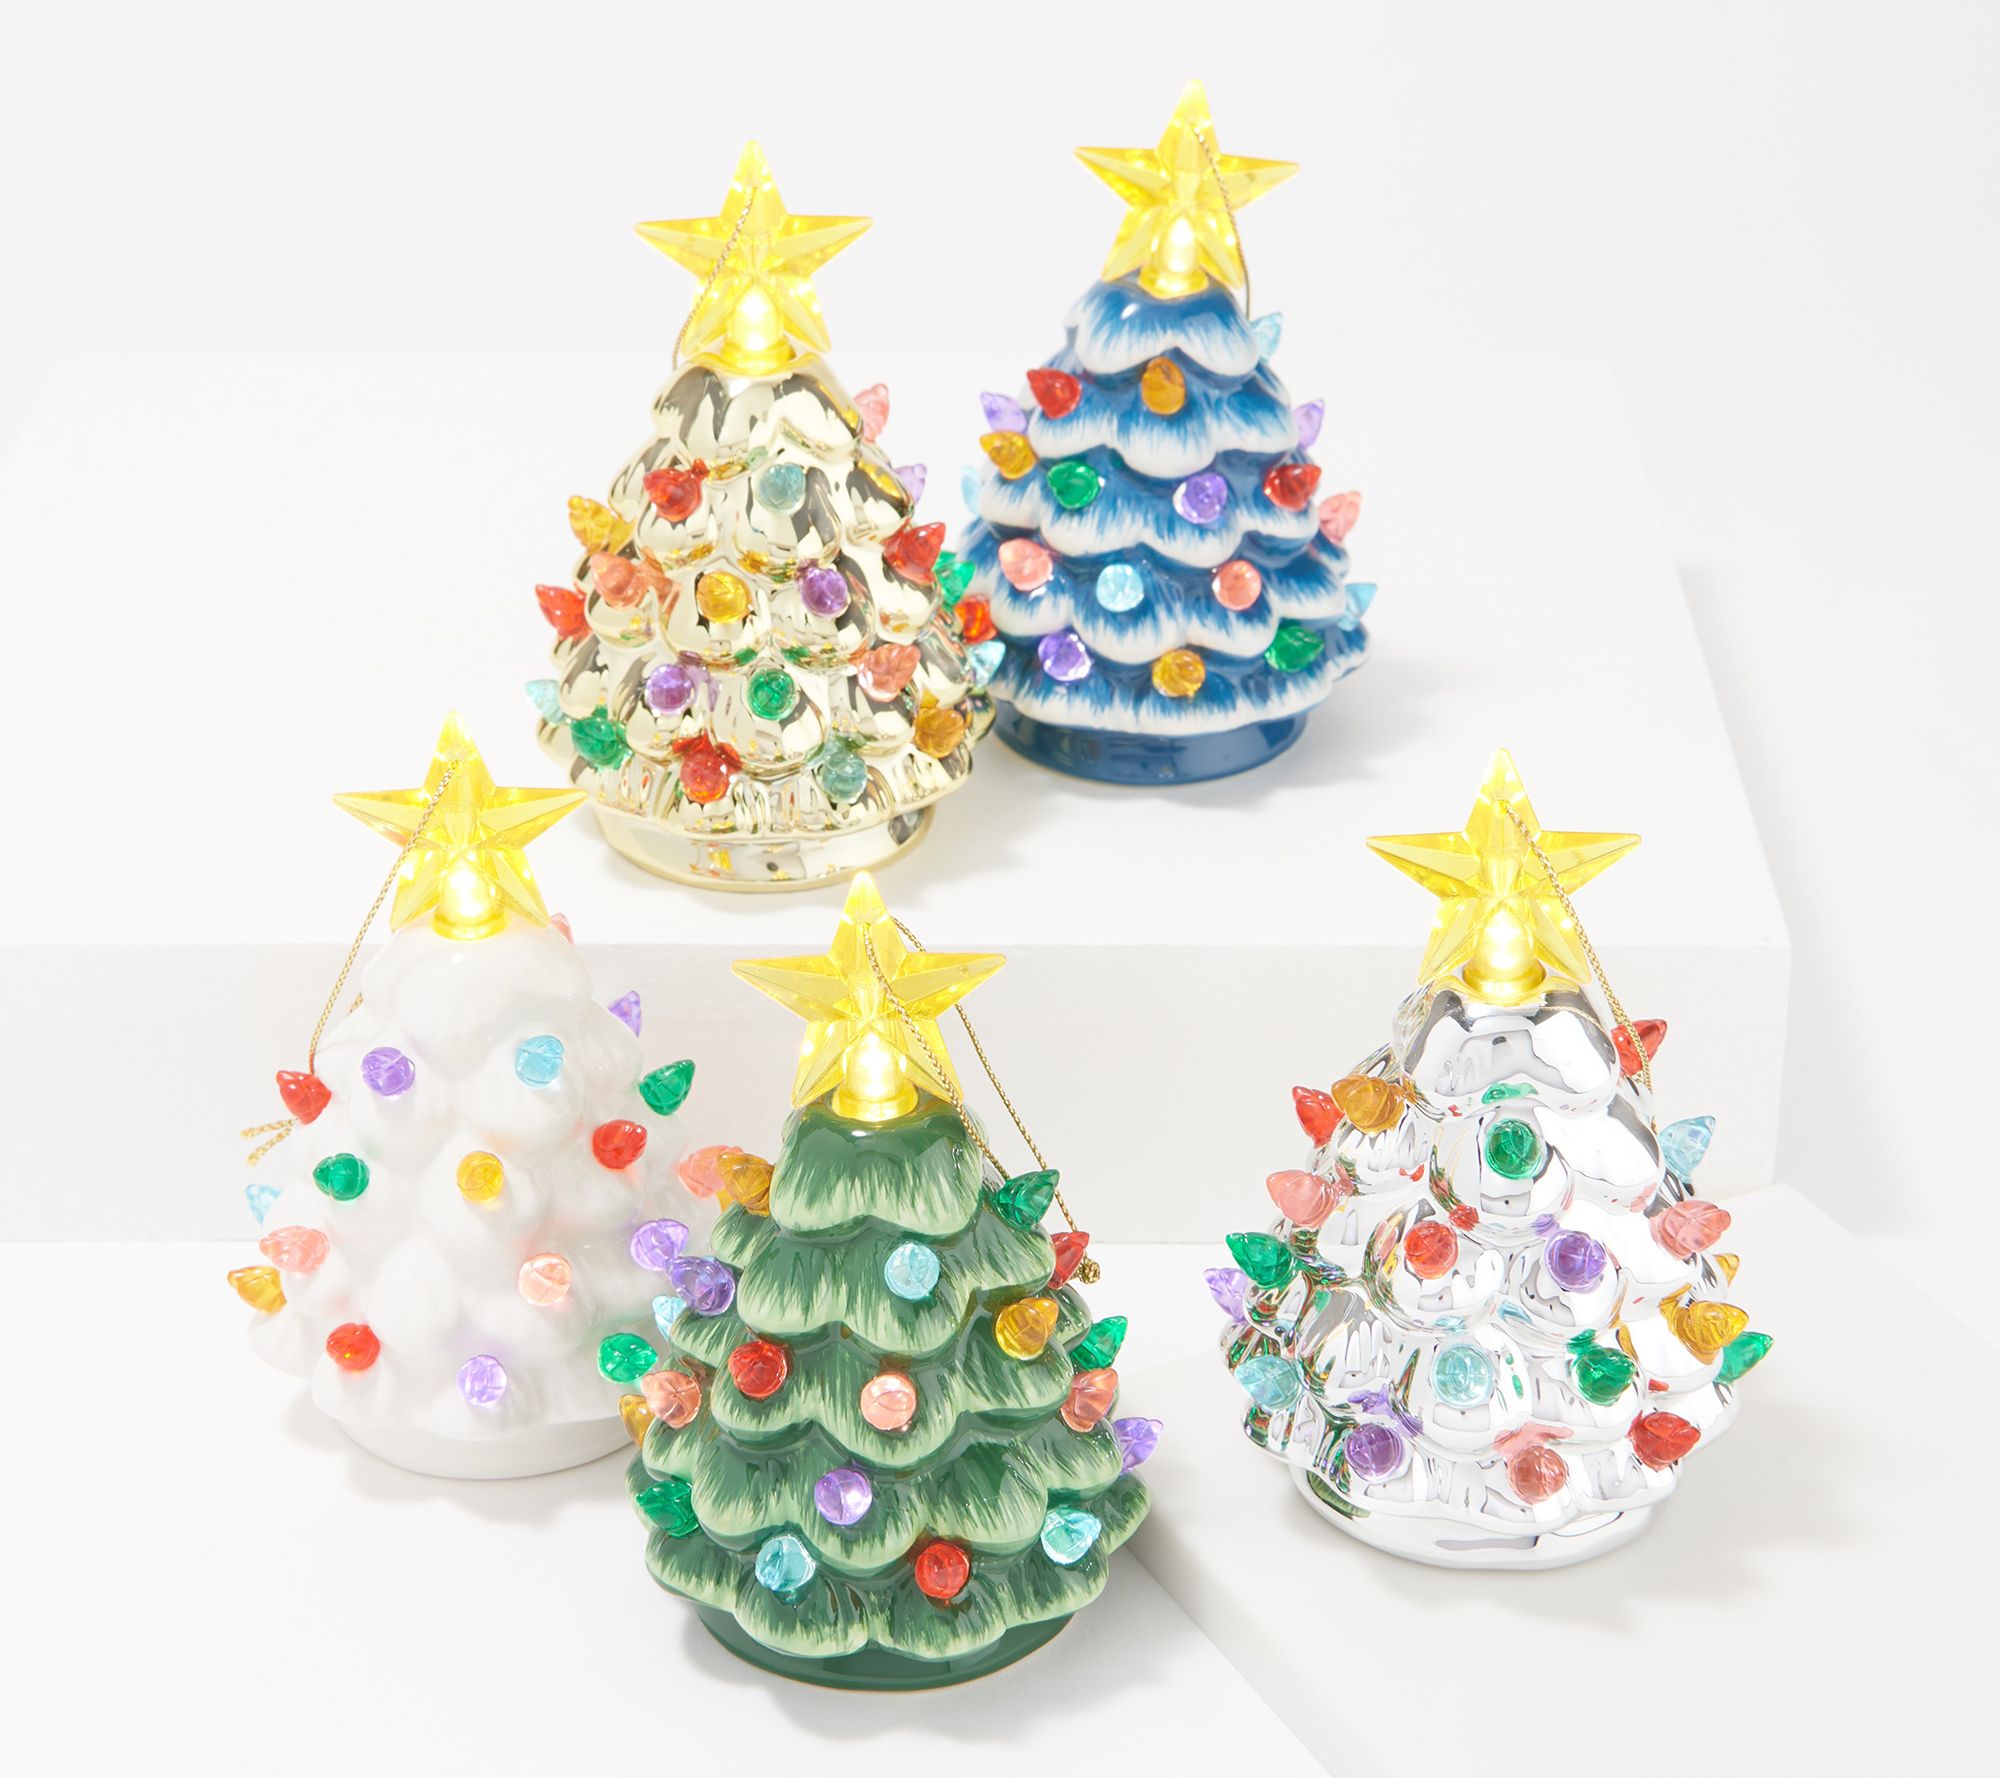 Timer & Gift Box White Ceramic Christmas Tree w/ Lights Music